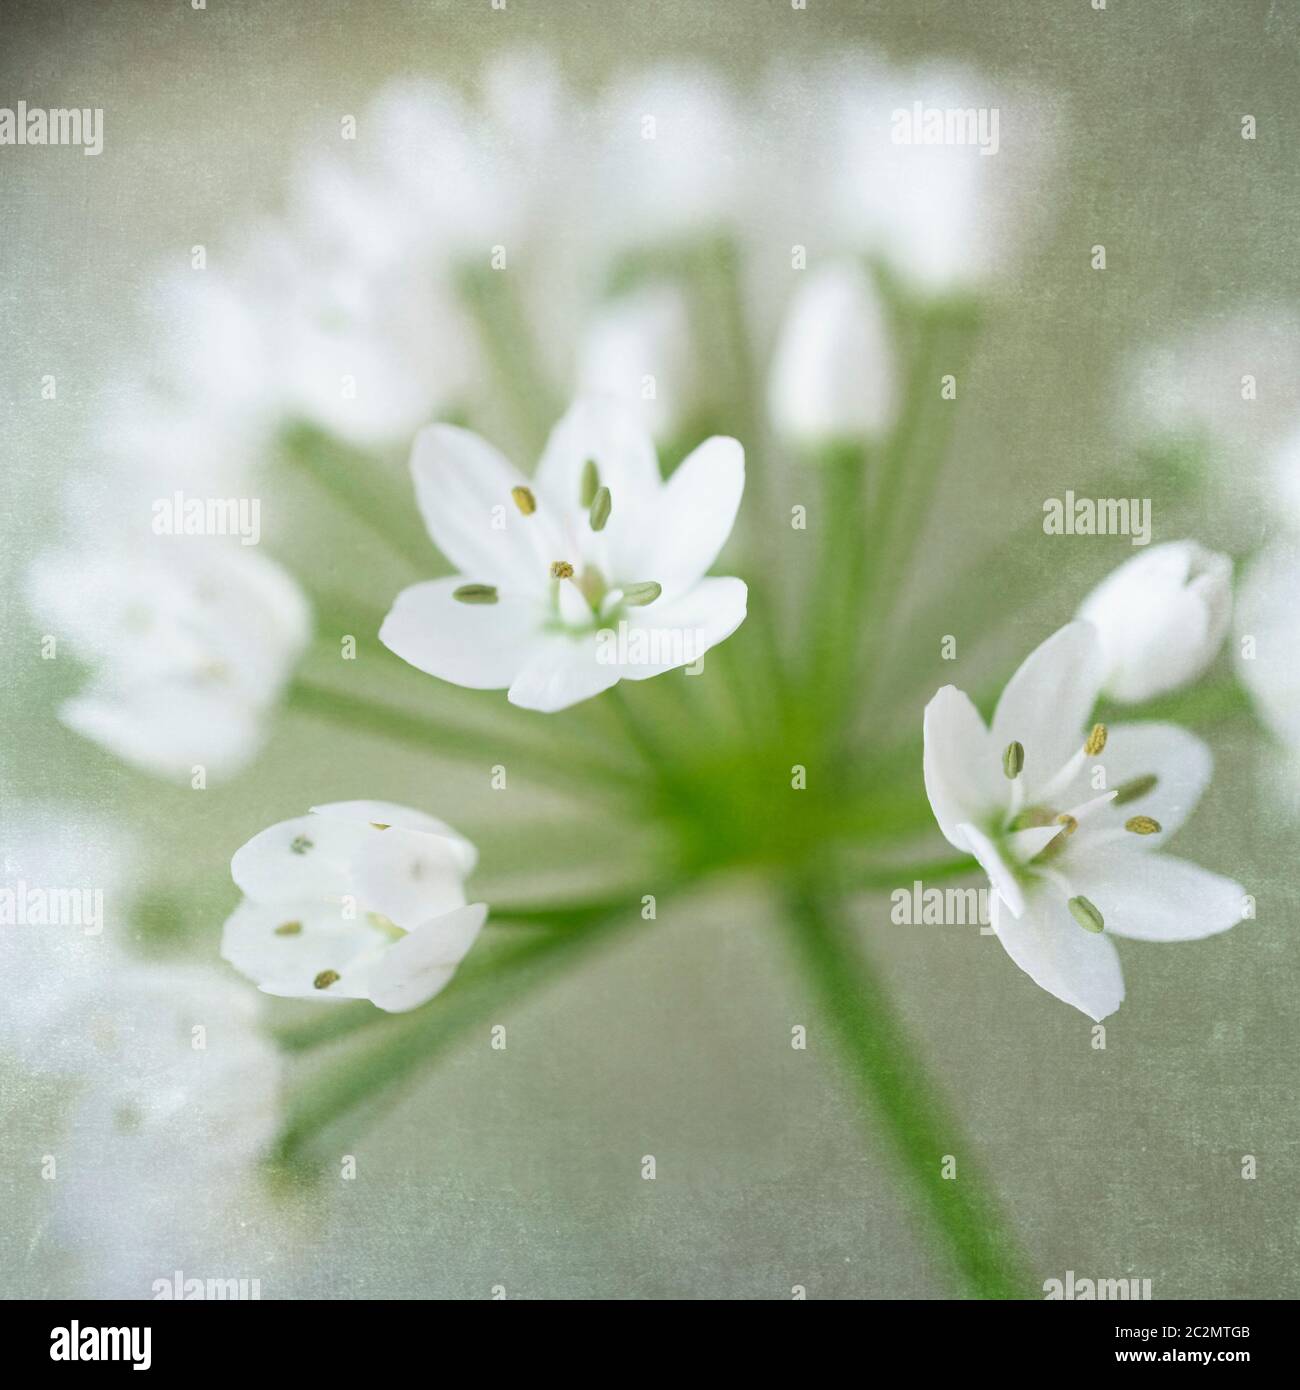 Allium cowanii flower closeup with texture overlay Stock Photo